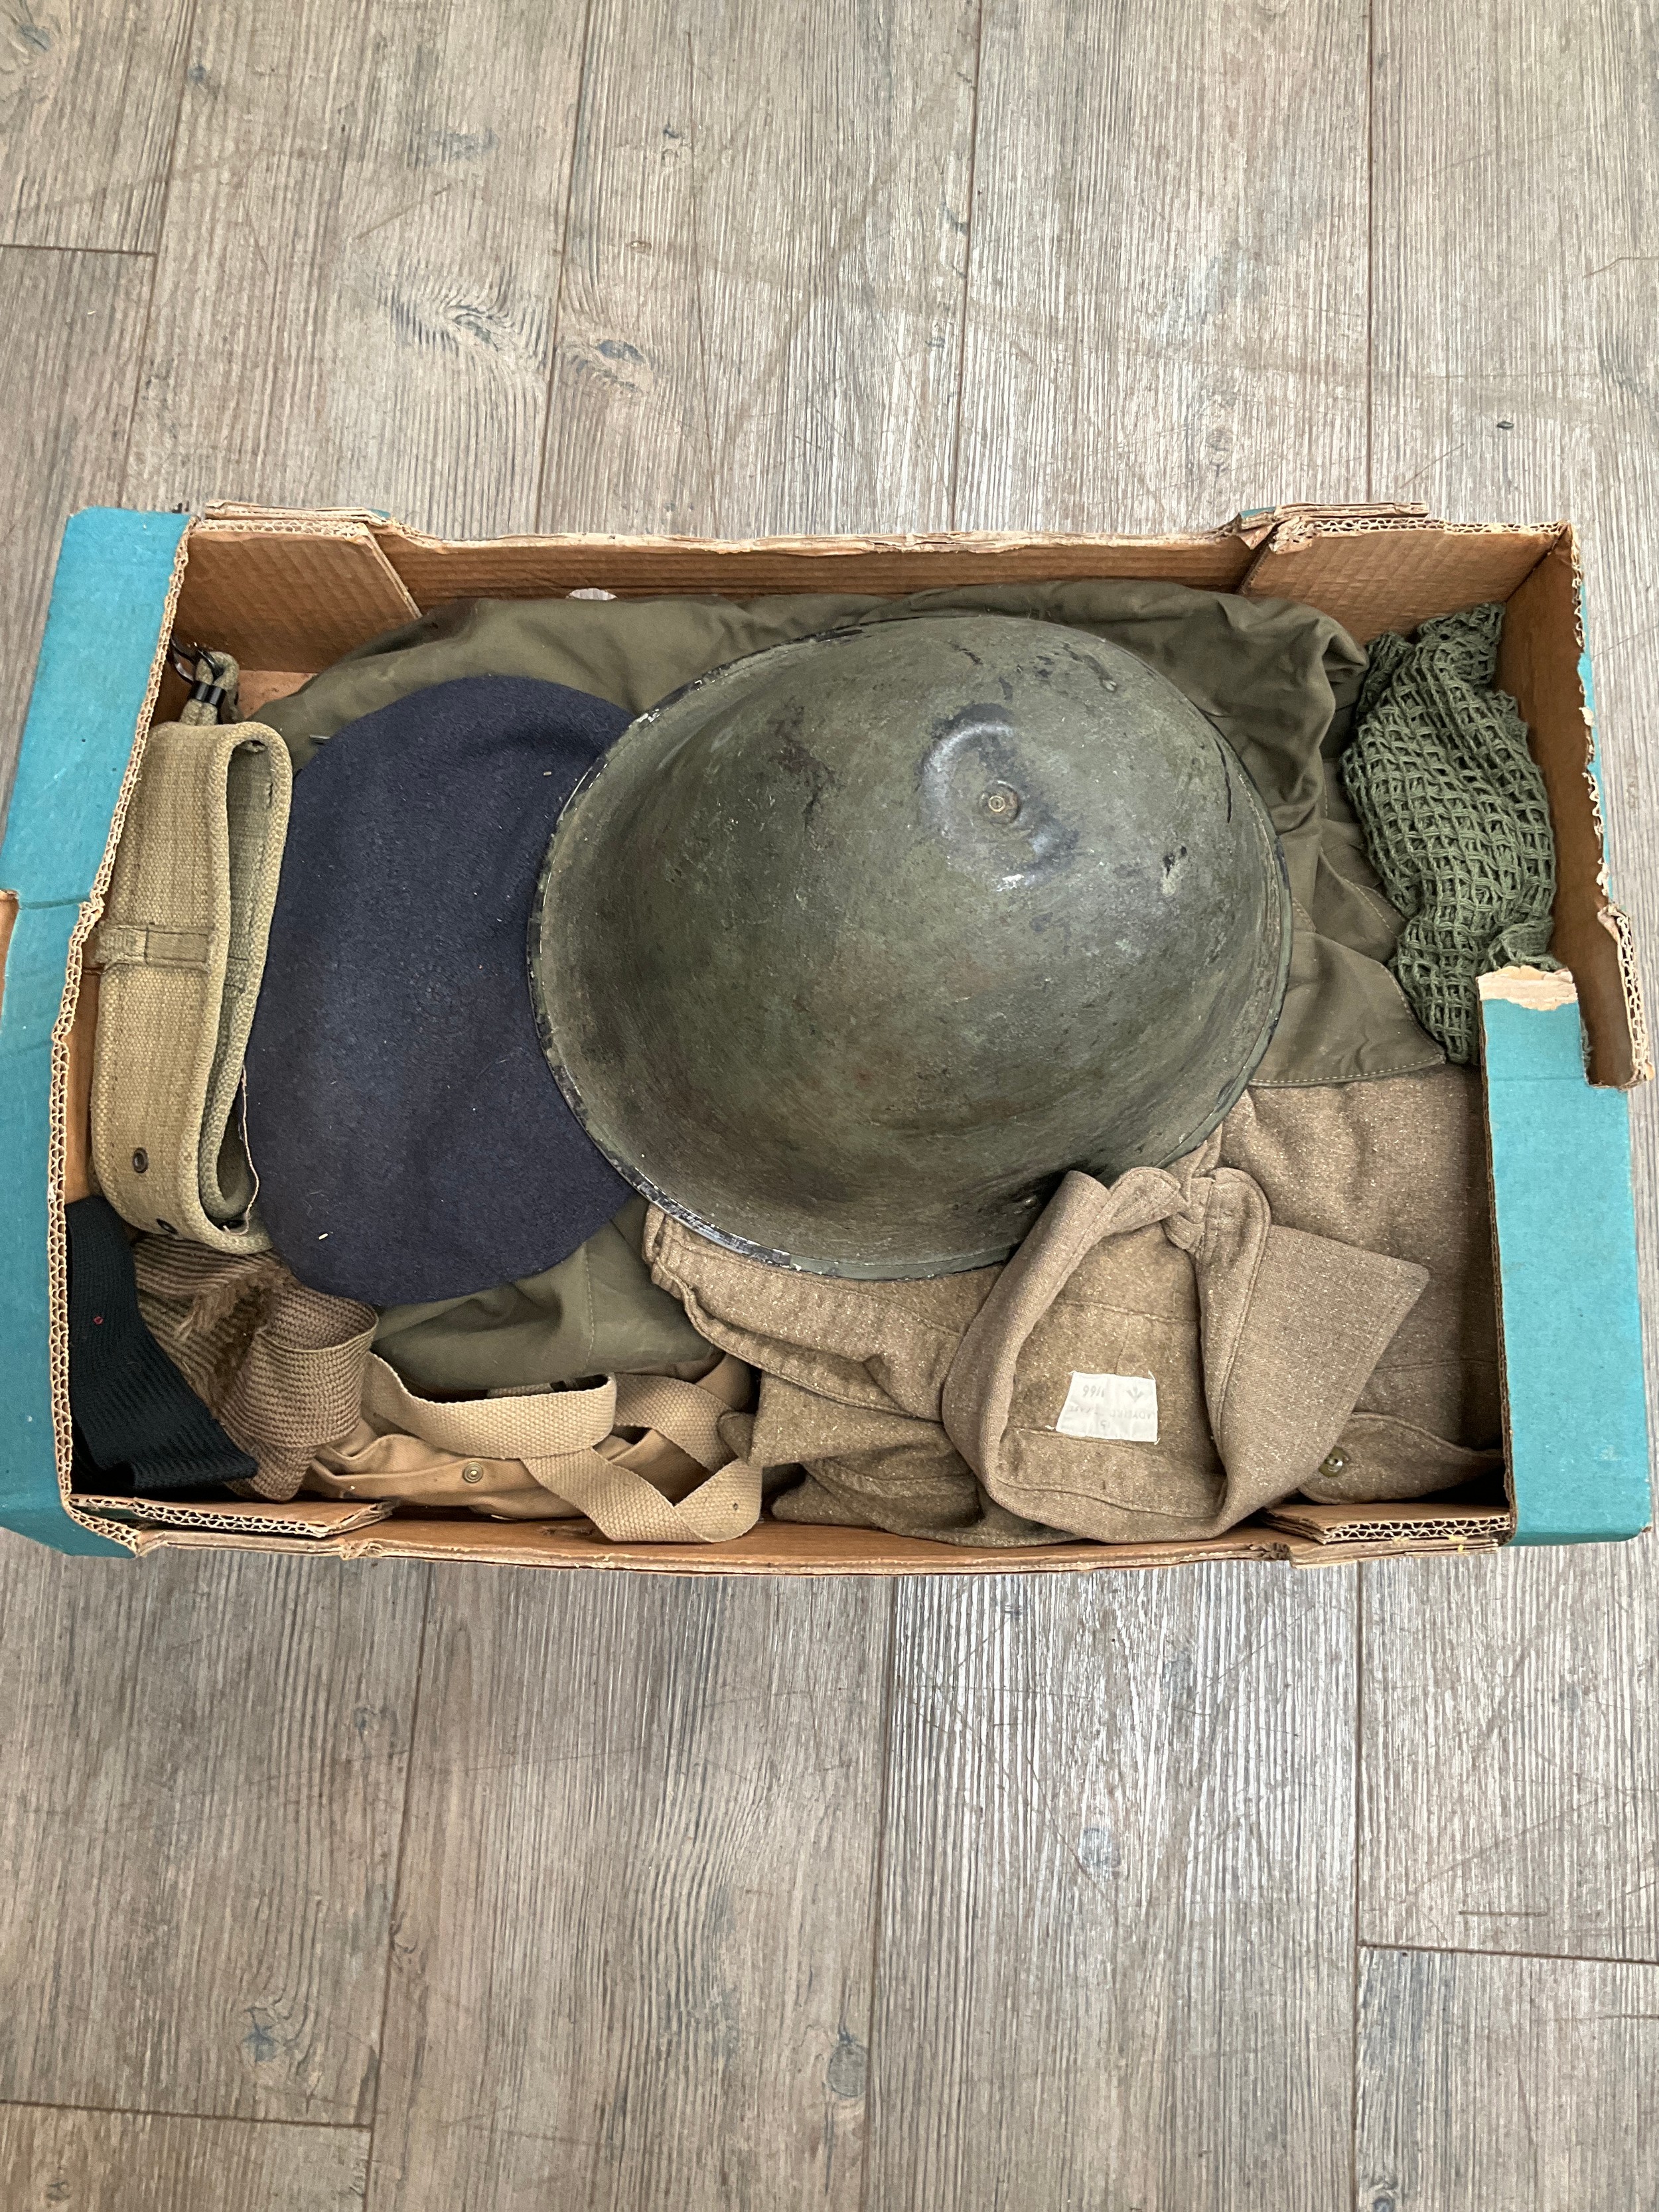 A box of post war British Army uniform, equipment, helmet etc